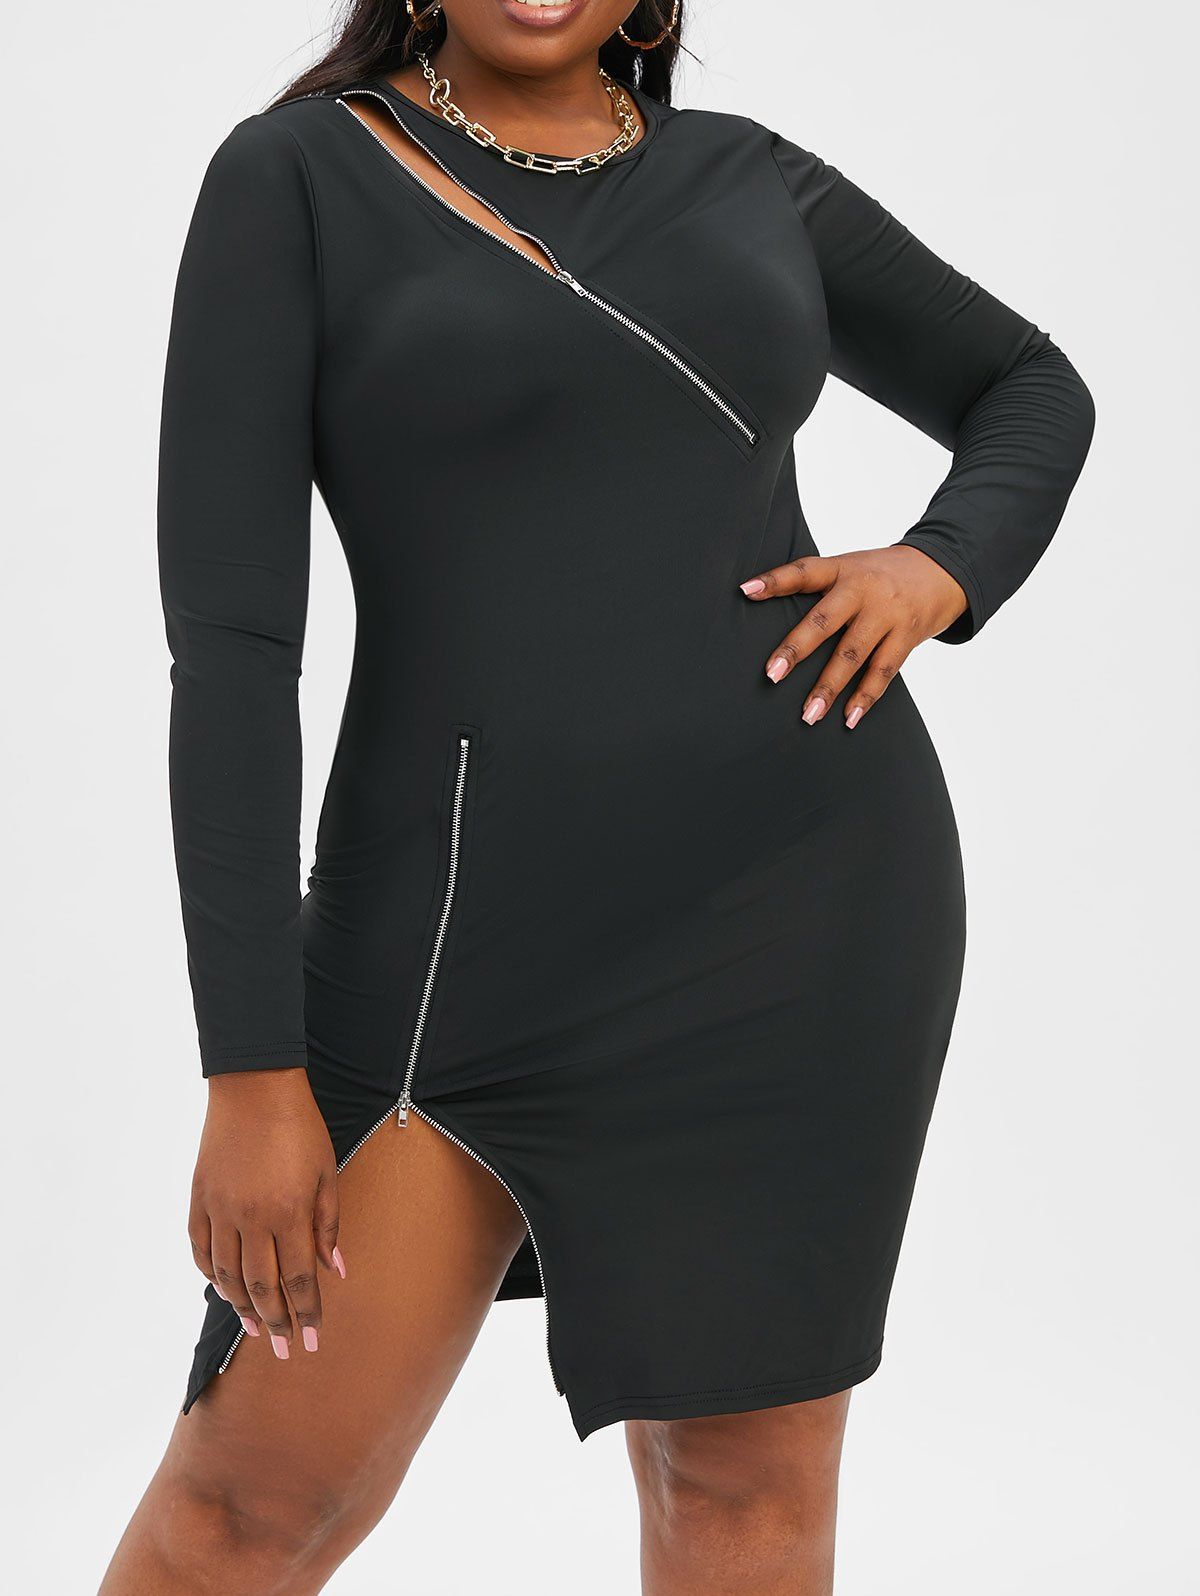 Plus Size Zip Embellished Slinky Dress - BLACK L